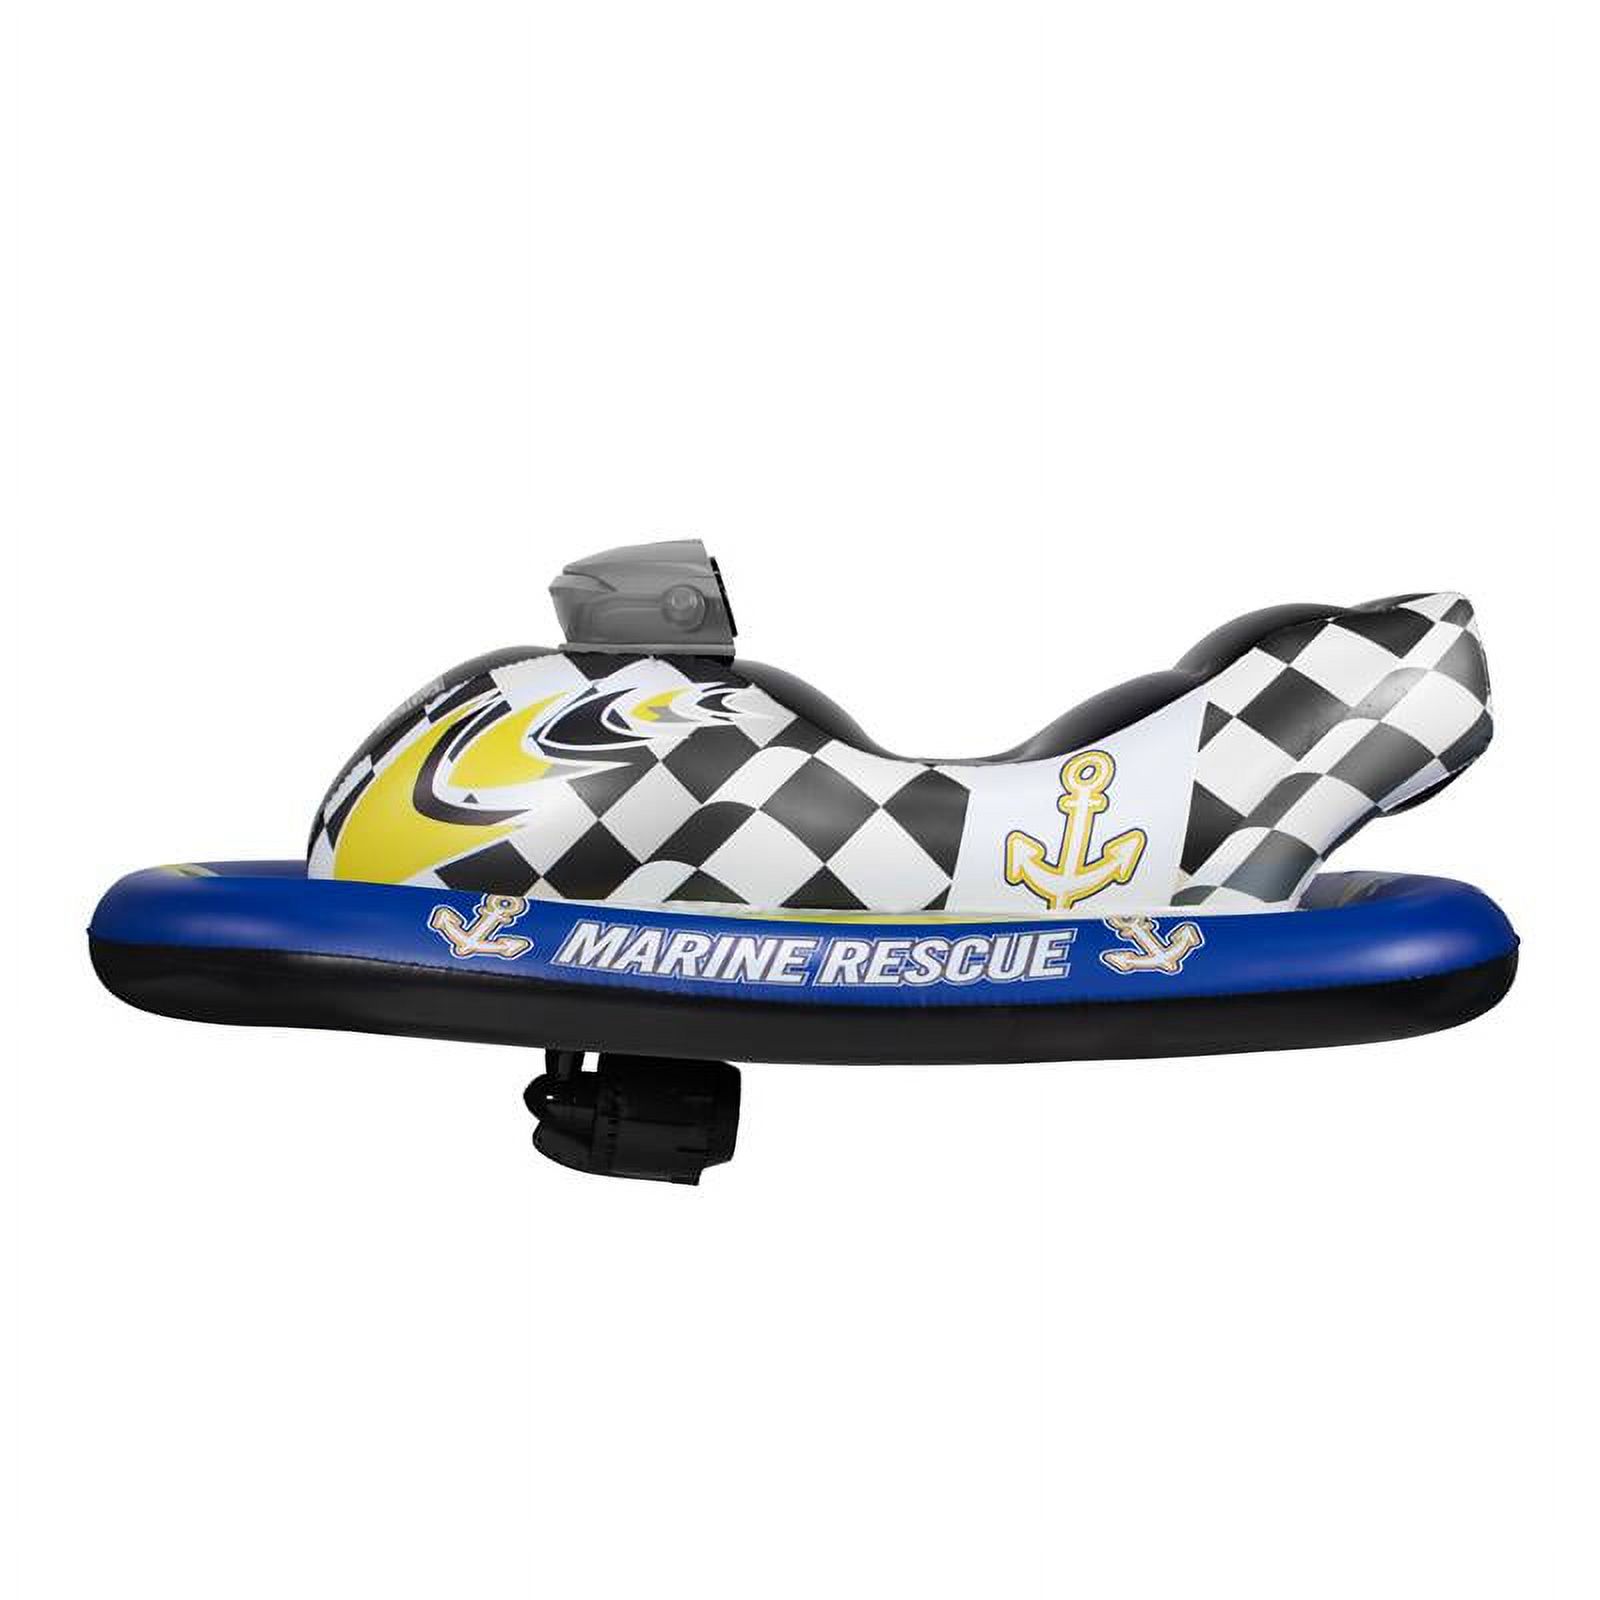 PoolCandy Marine Rescue Motorized Ride-On Inflatable Watercraft Float - image 1 of 4